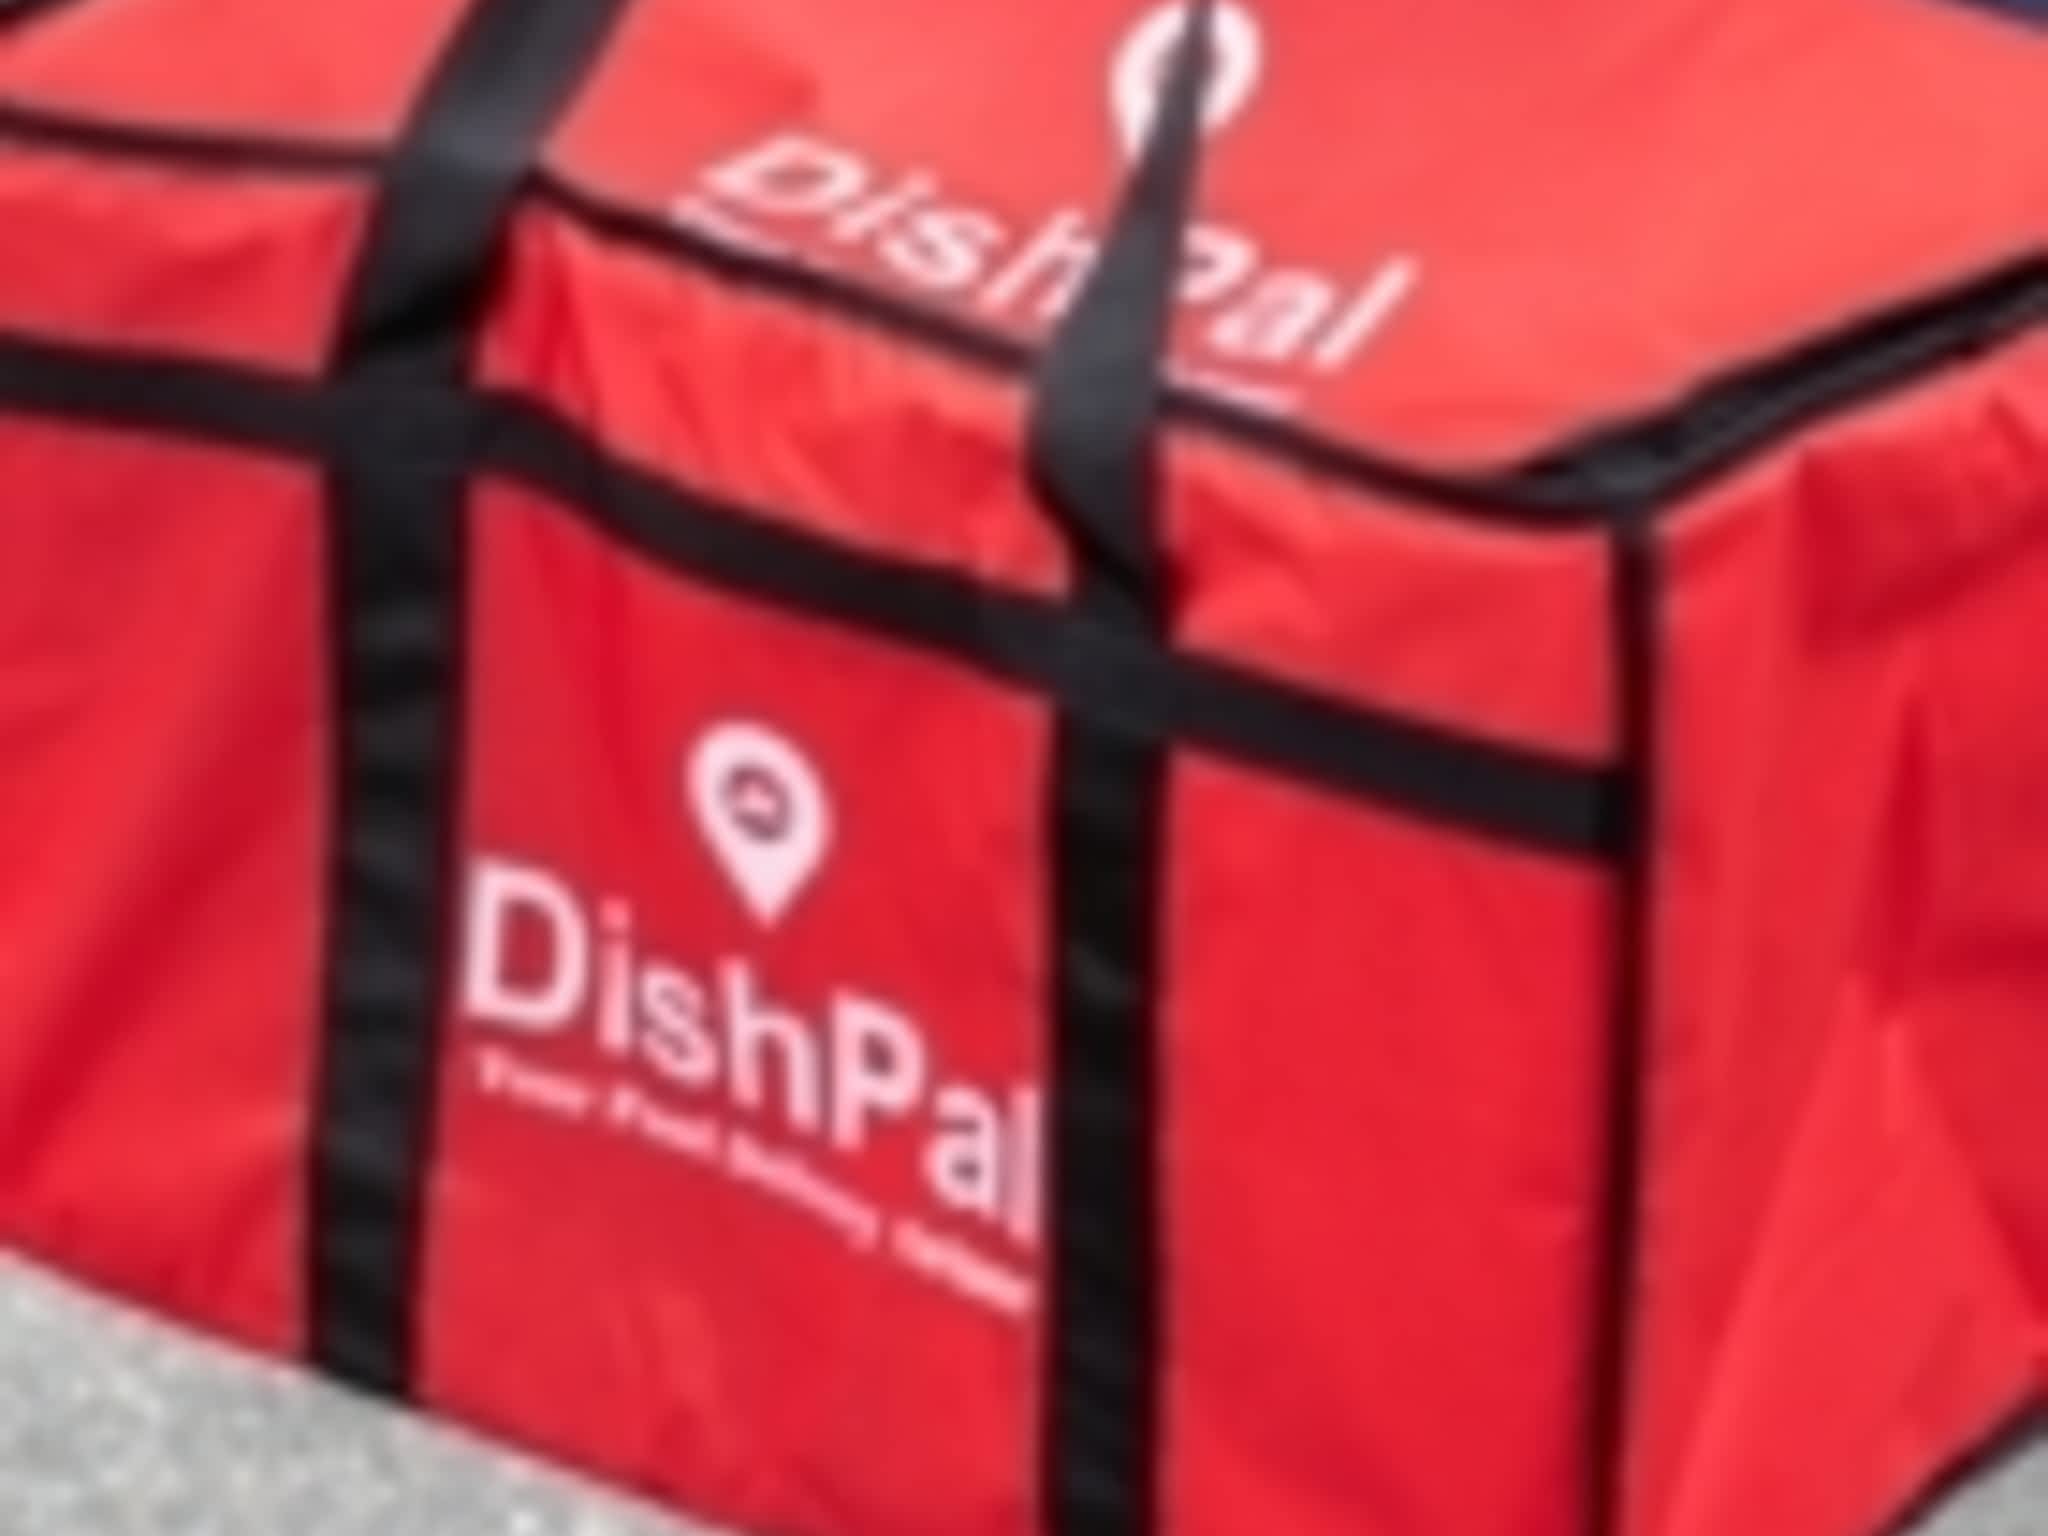 photo Dishpal Restaurant Services Corp